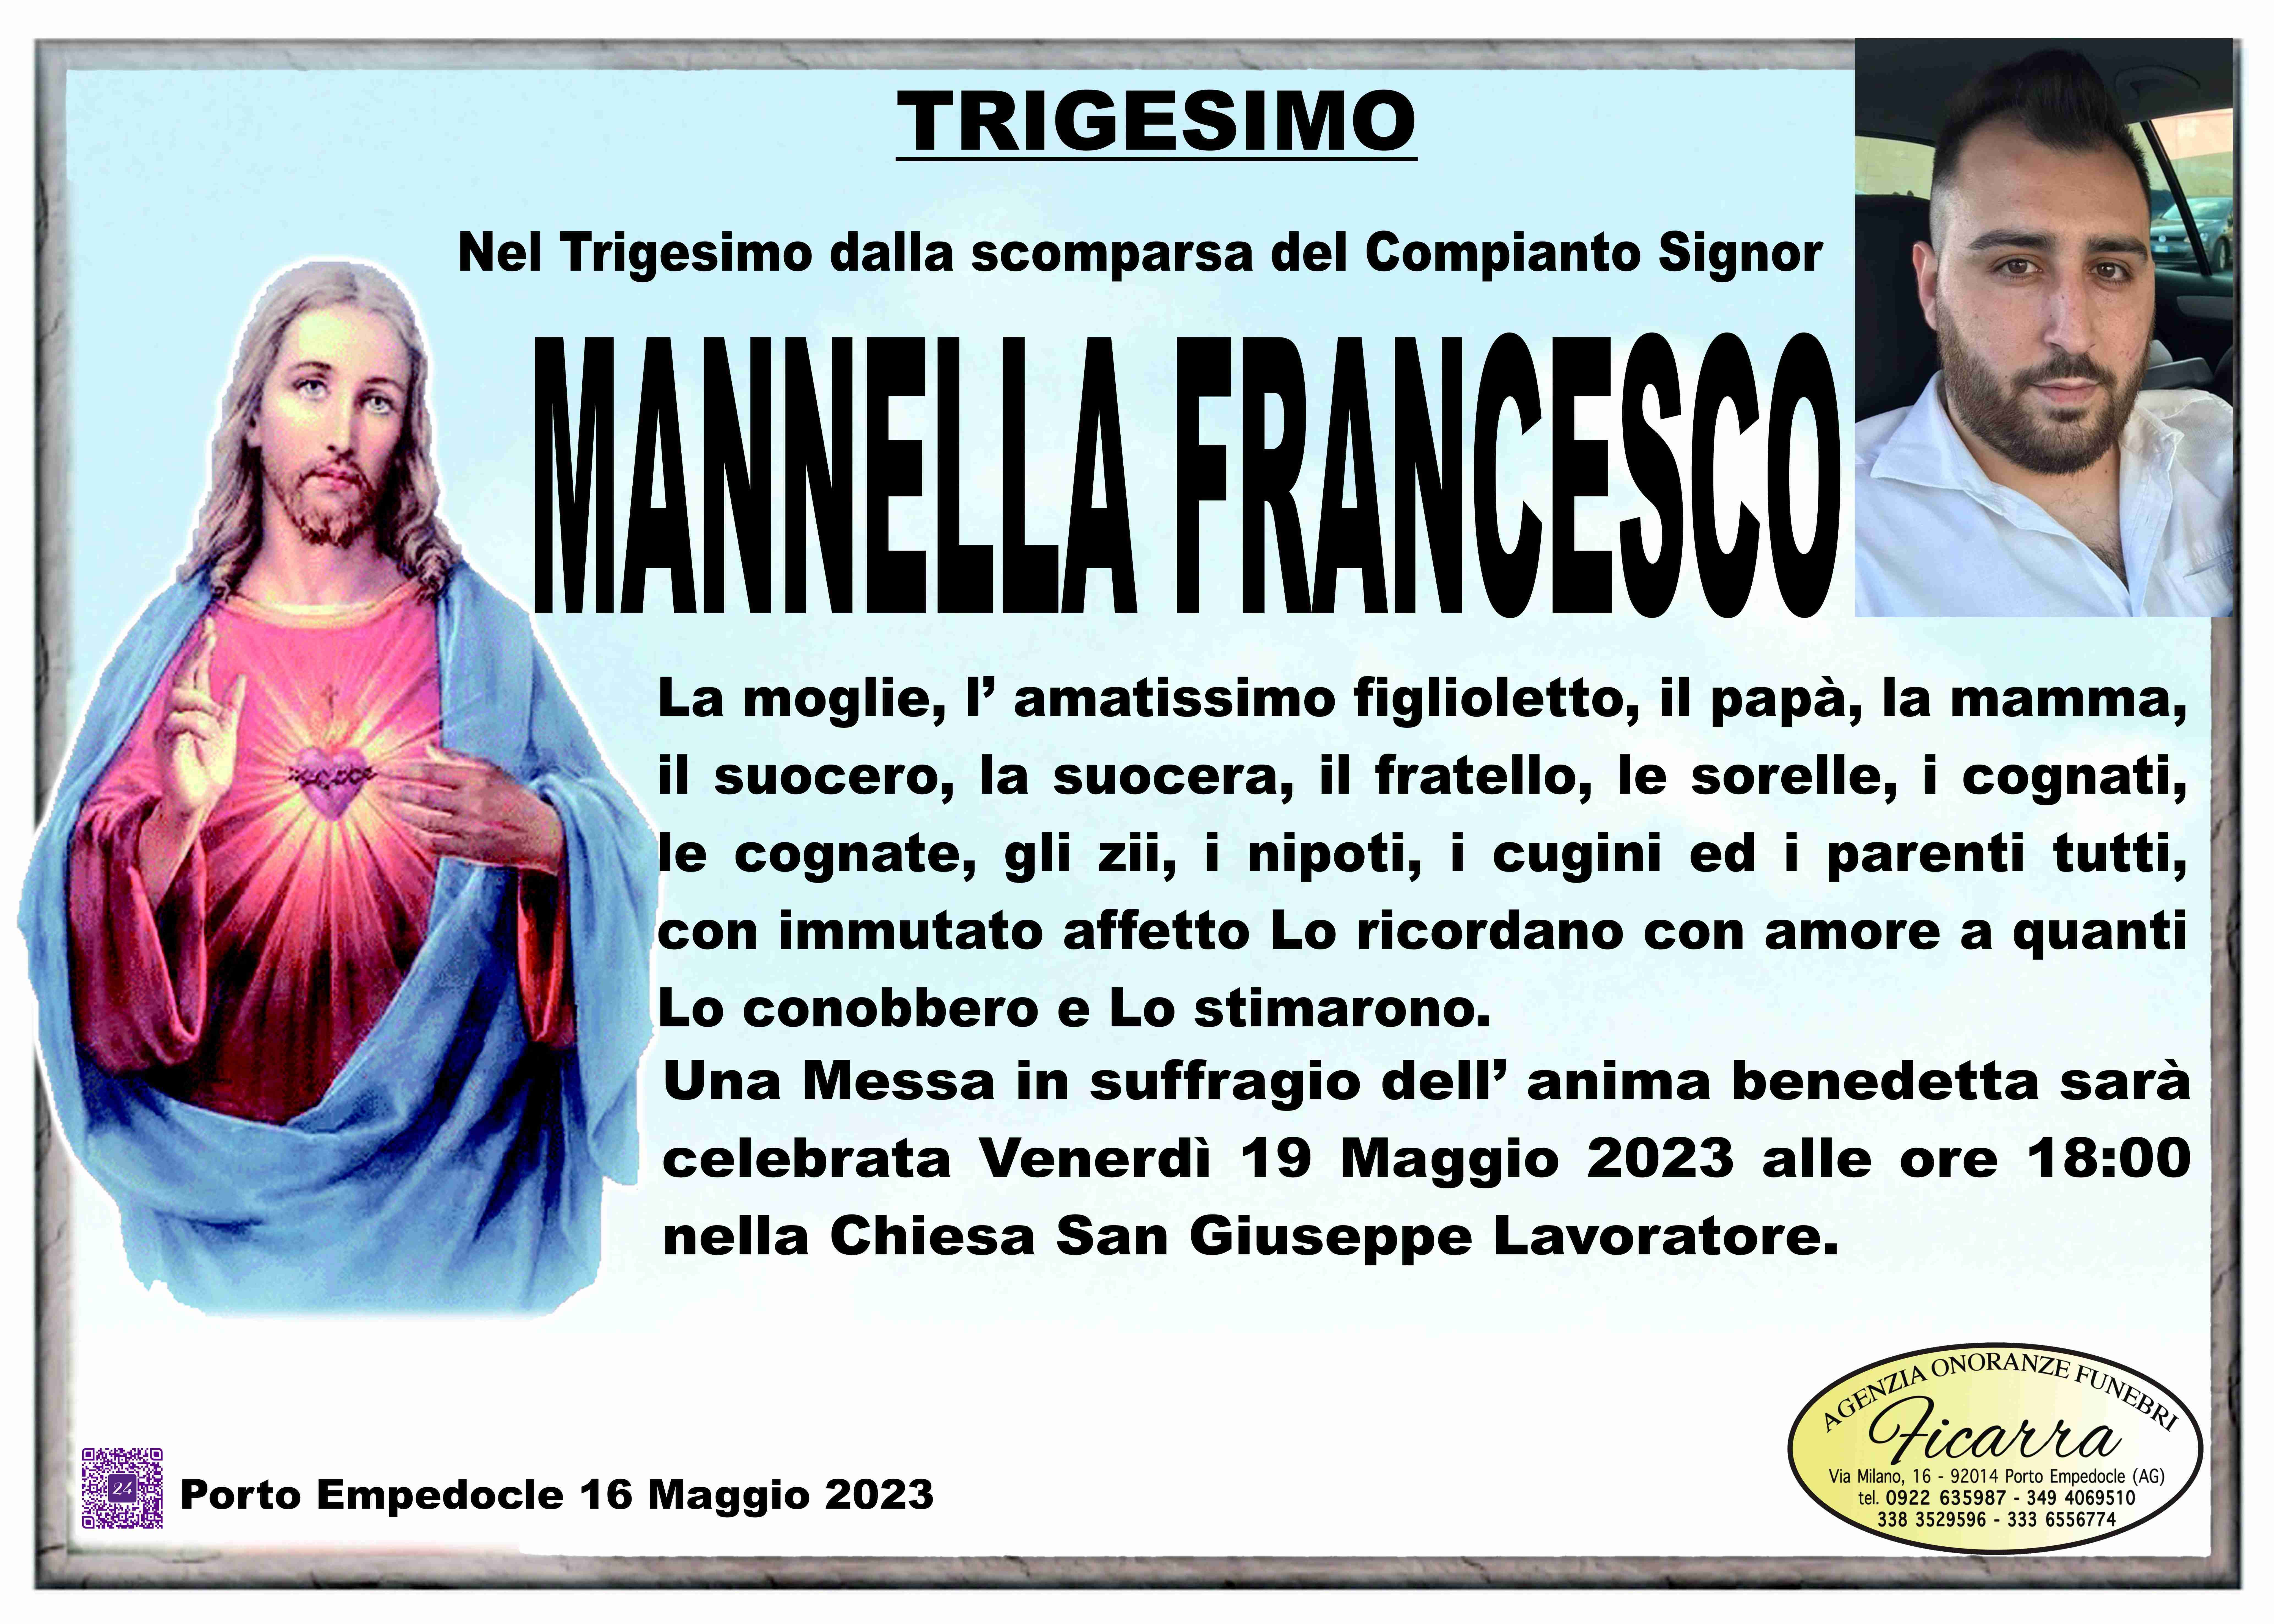 Francesco Mannella